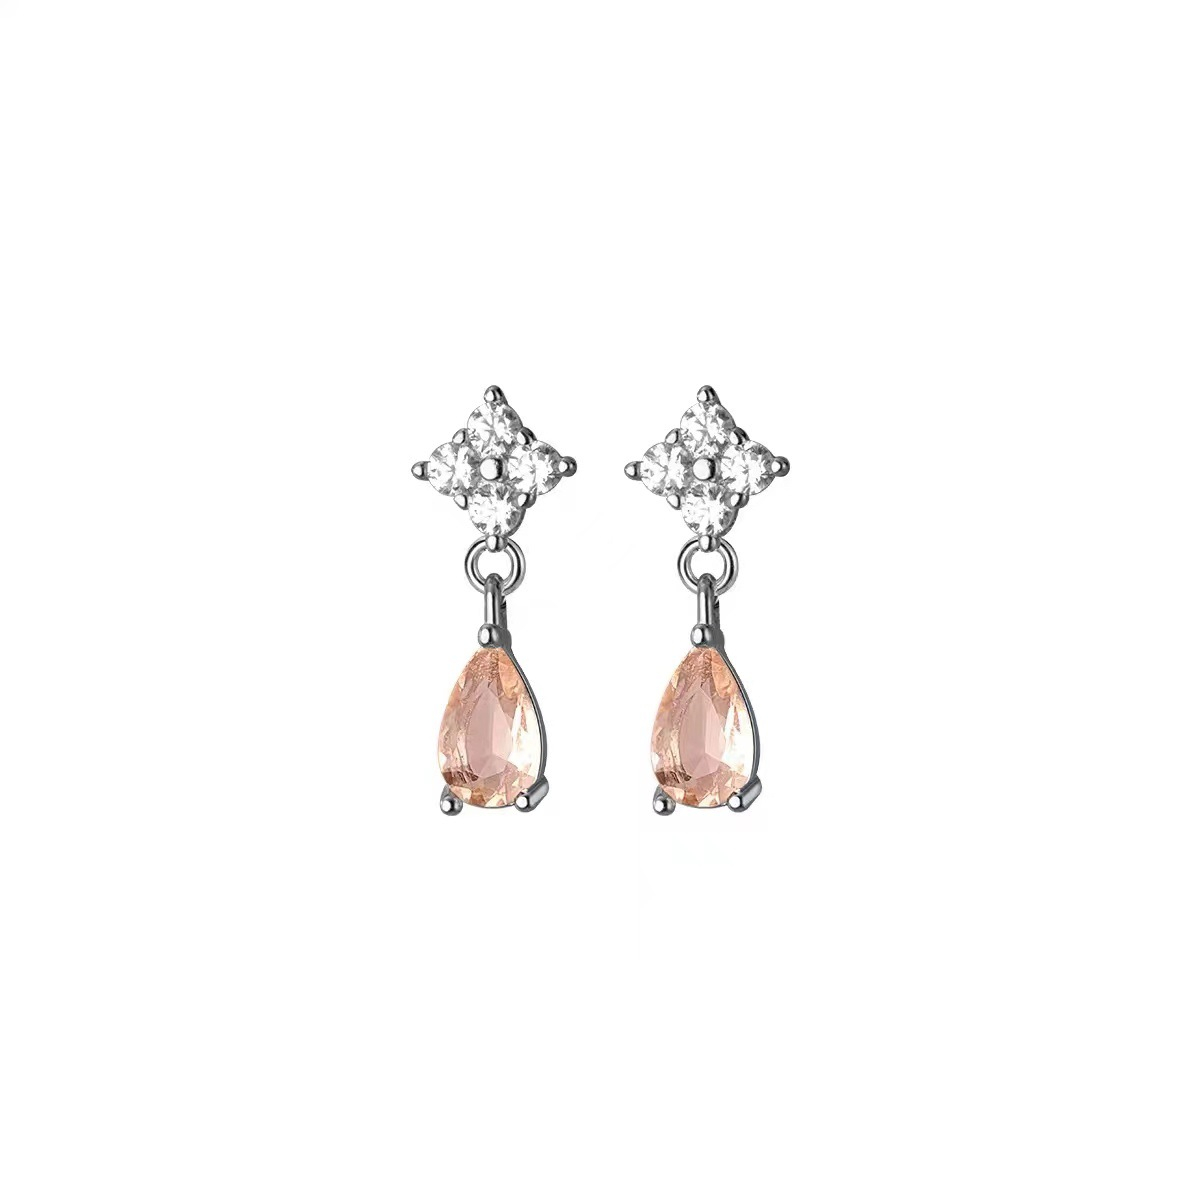 XCL132 lady transparent crystal shape water drop girl stud earrings party wedding sweet cute jewelry